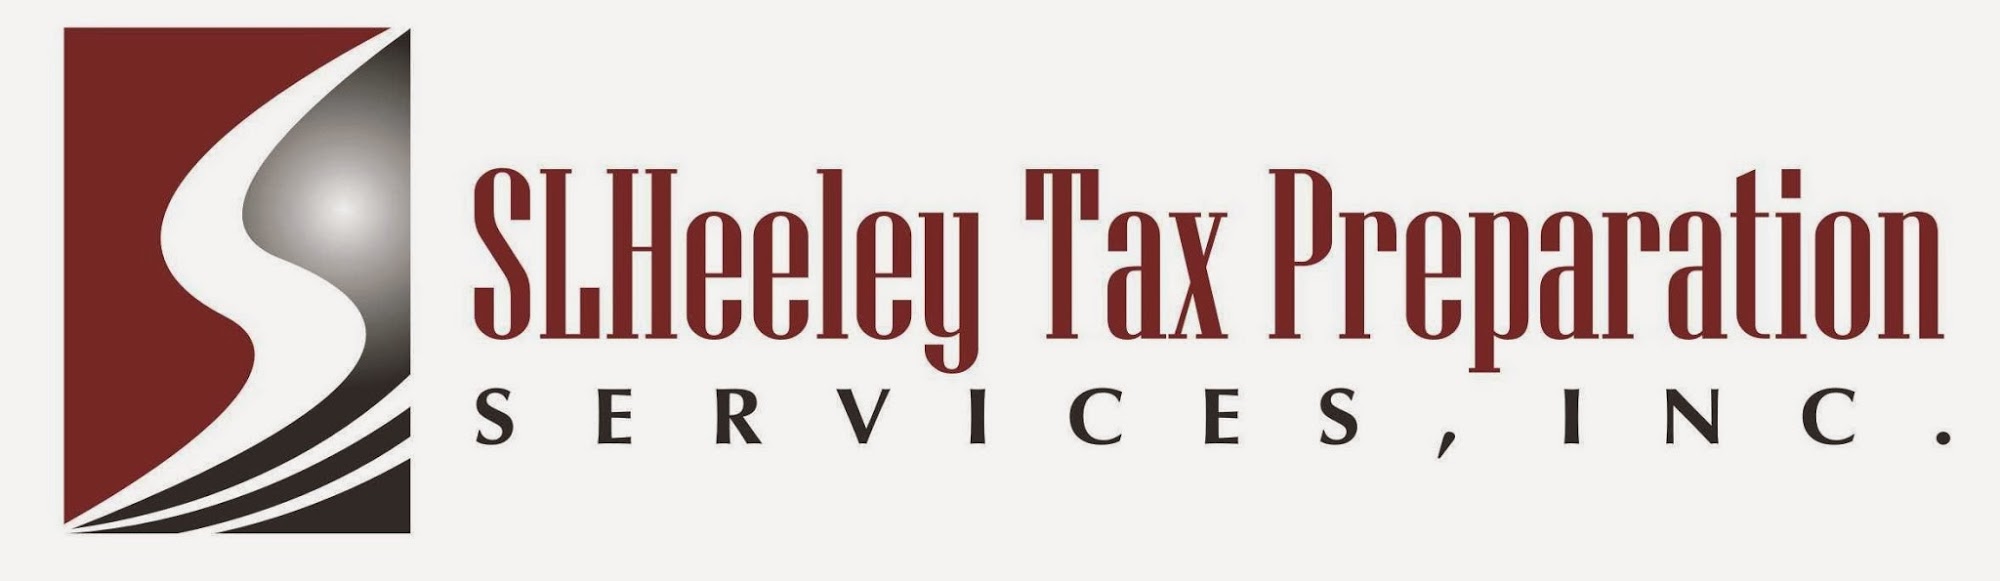 SLHeeley Tax Prep Services, Inc.